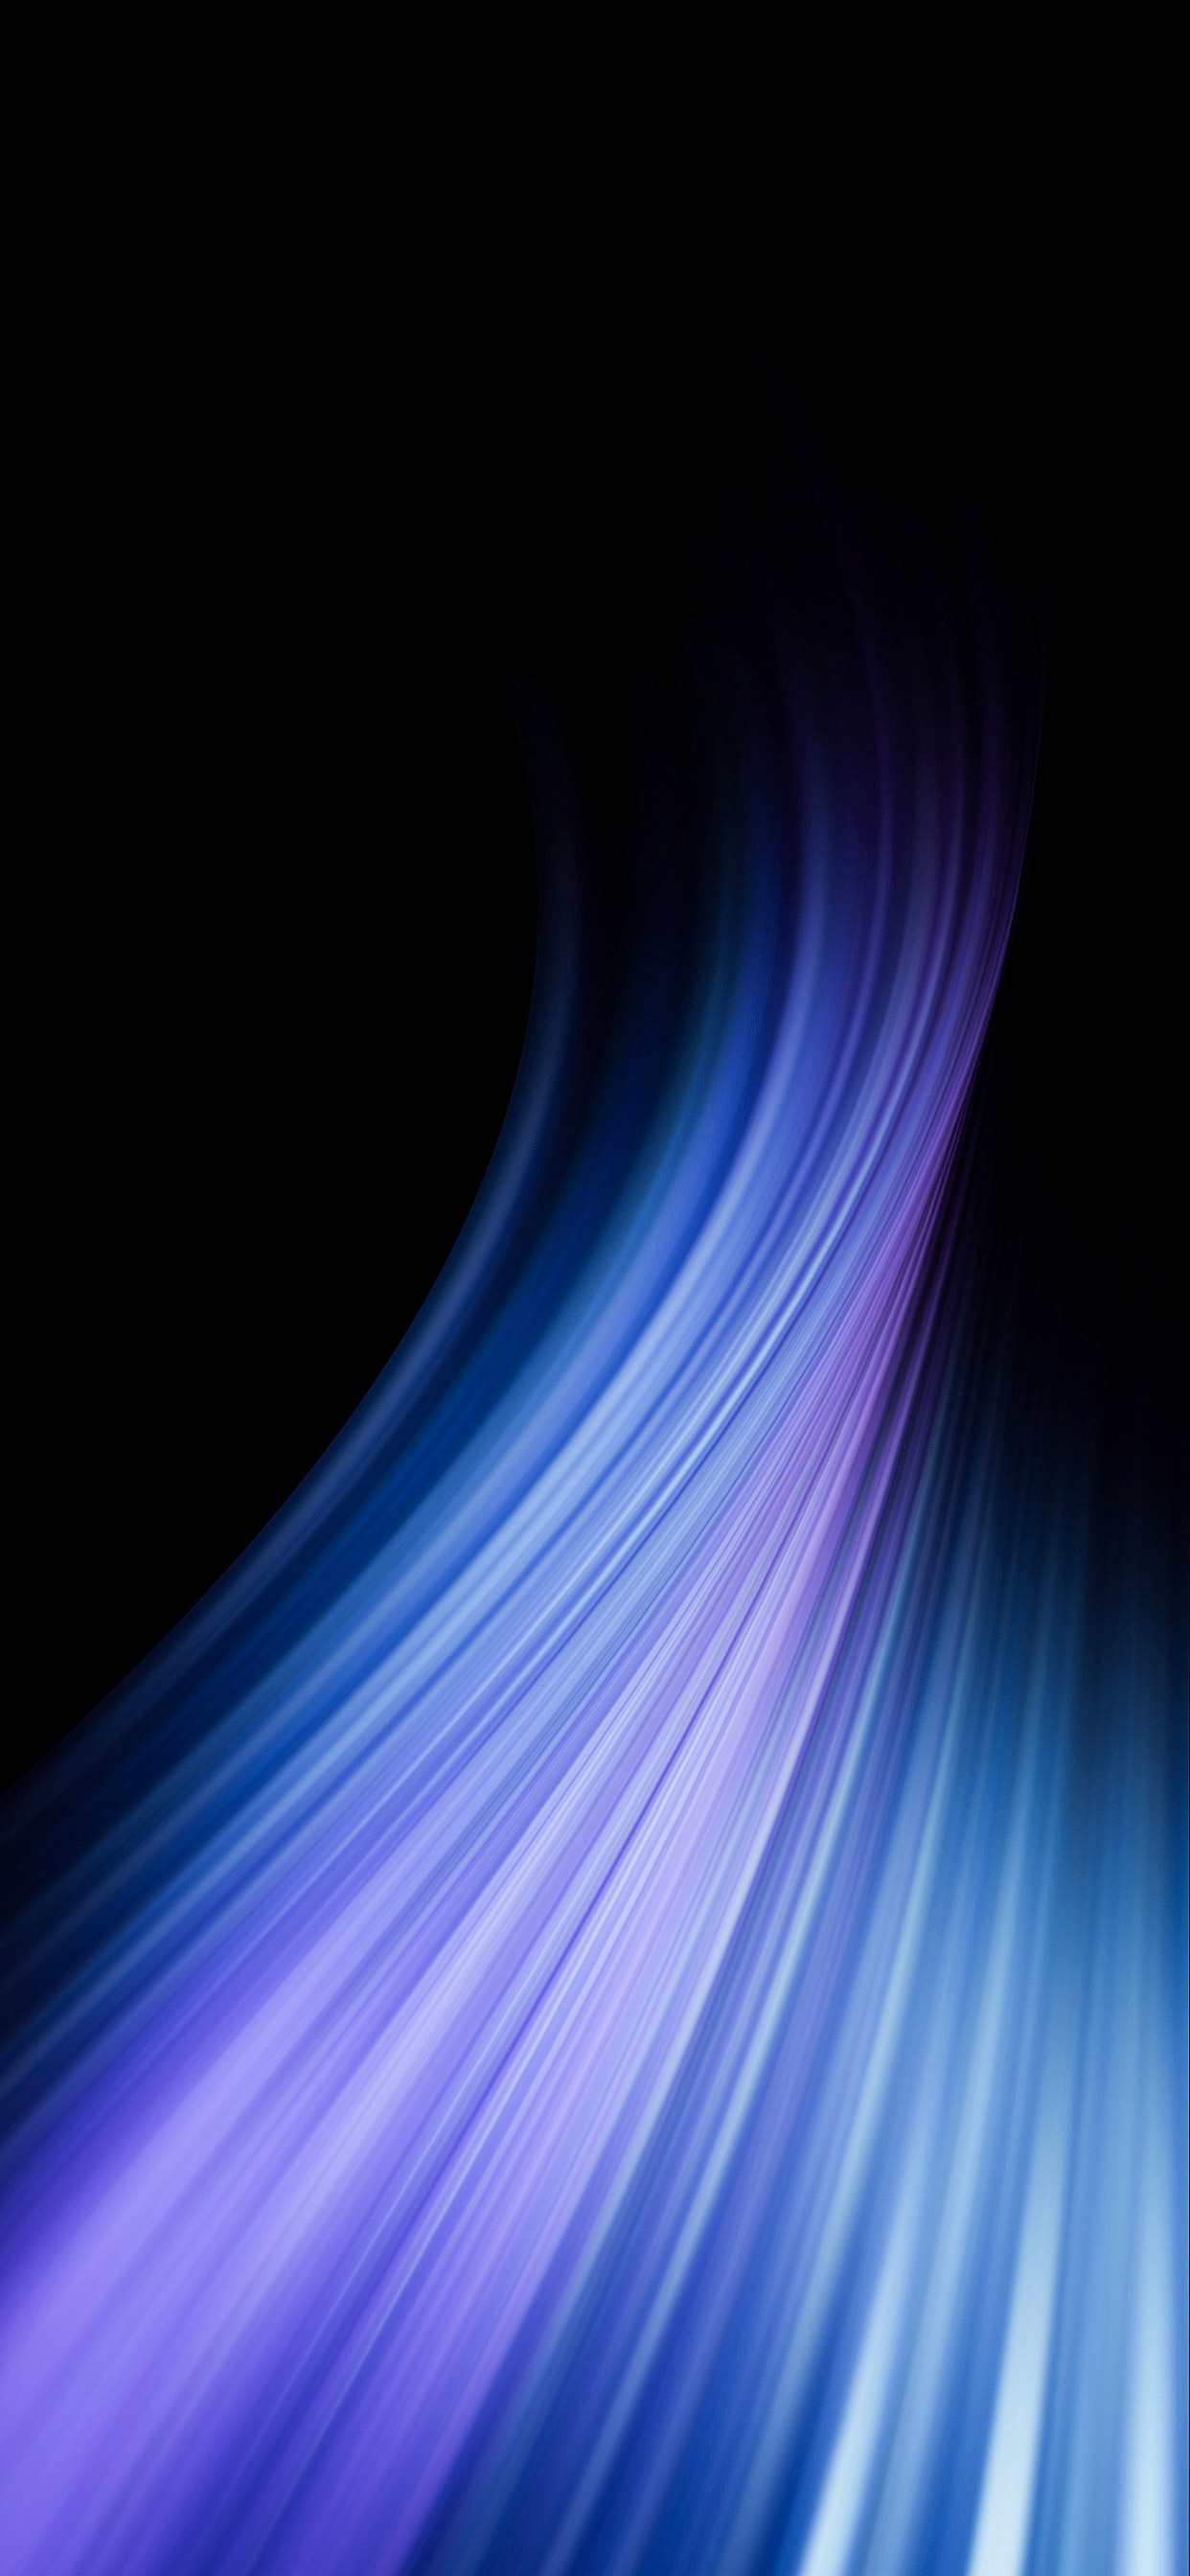 Fondos de pantalla de esta semana: Electric Wave en tres colores | iPhoneros